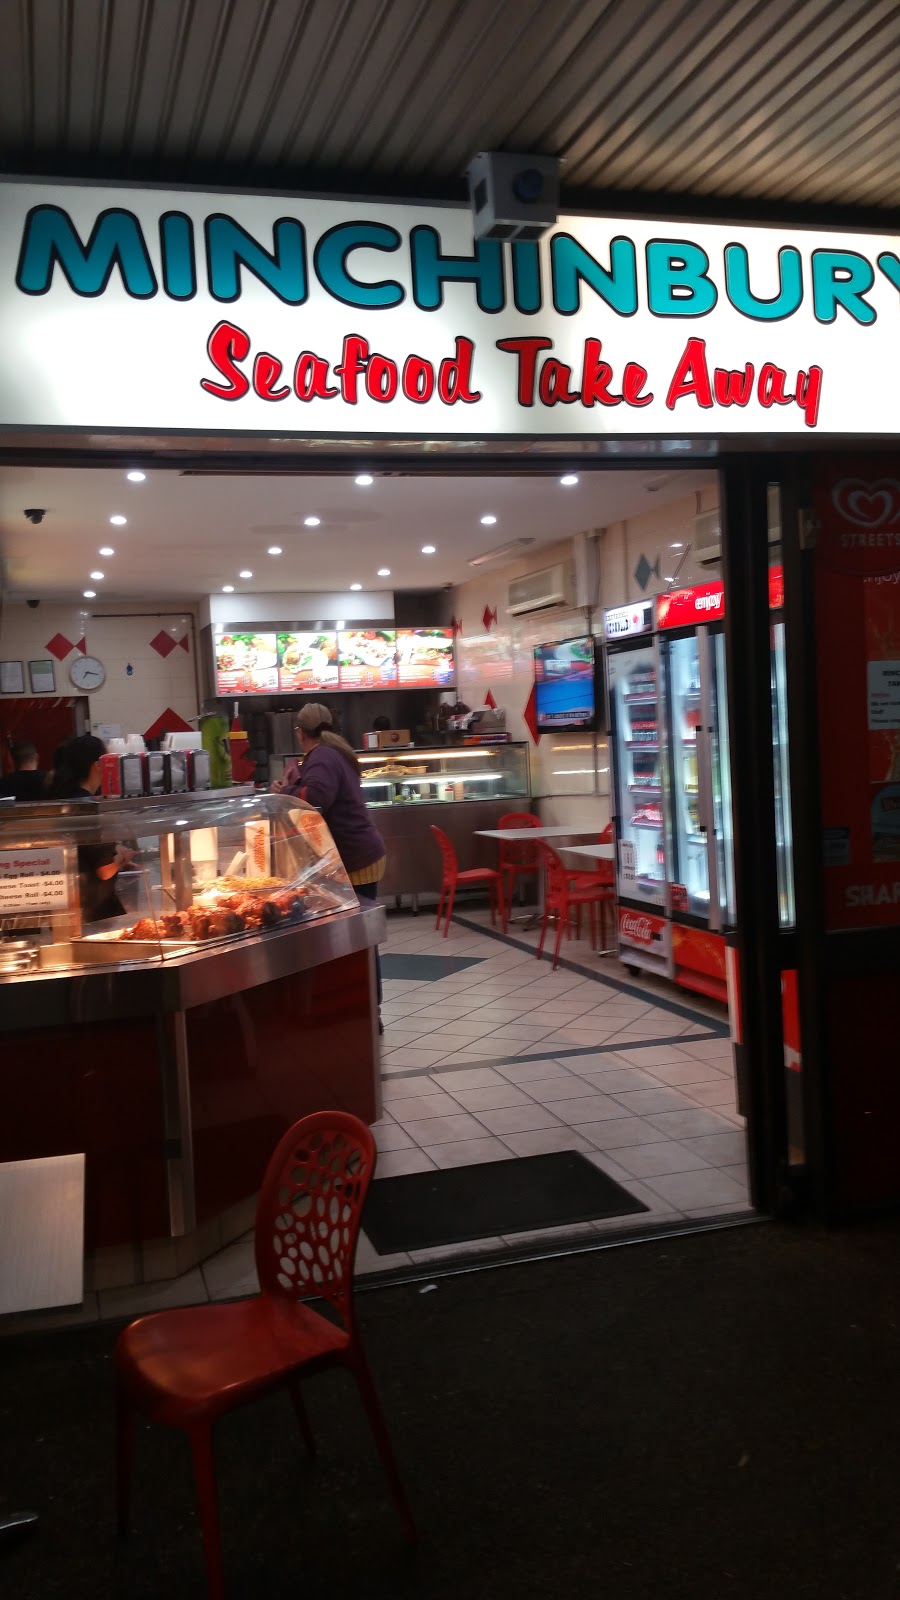 Minchinbury Takeaway Seafood and Kebab | restaurant | 38 Minchin Dr, Minchinbury NSW 2770, Australia | 0298321894 OR +61 2 9832 1894